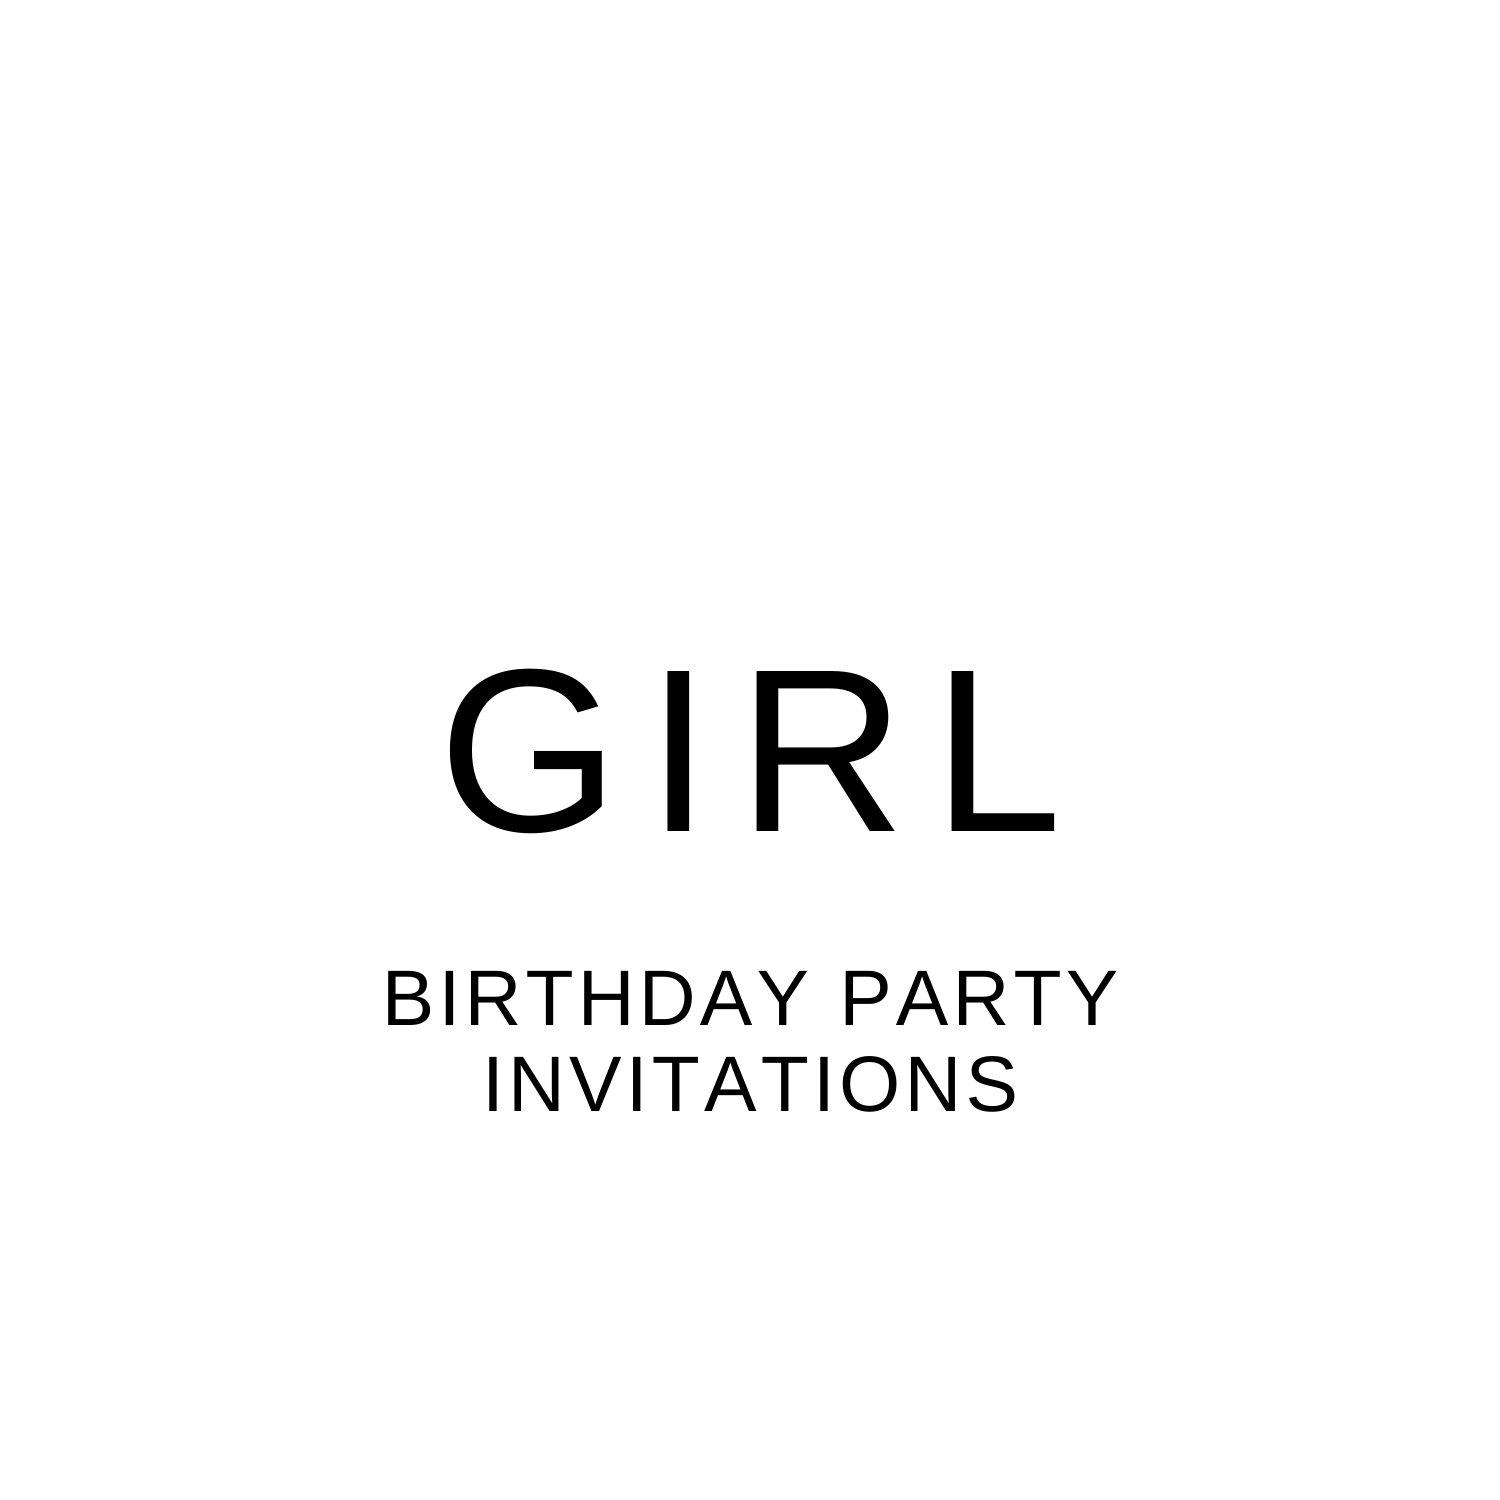 GIRL BIRTHDAY PARTY INVITES